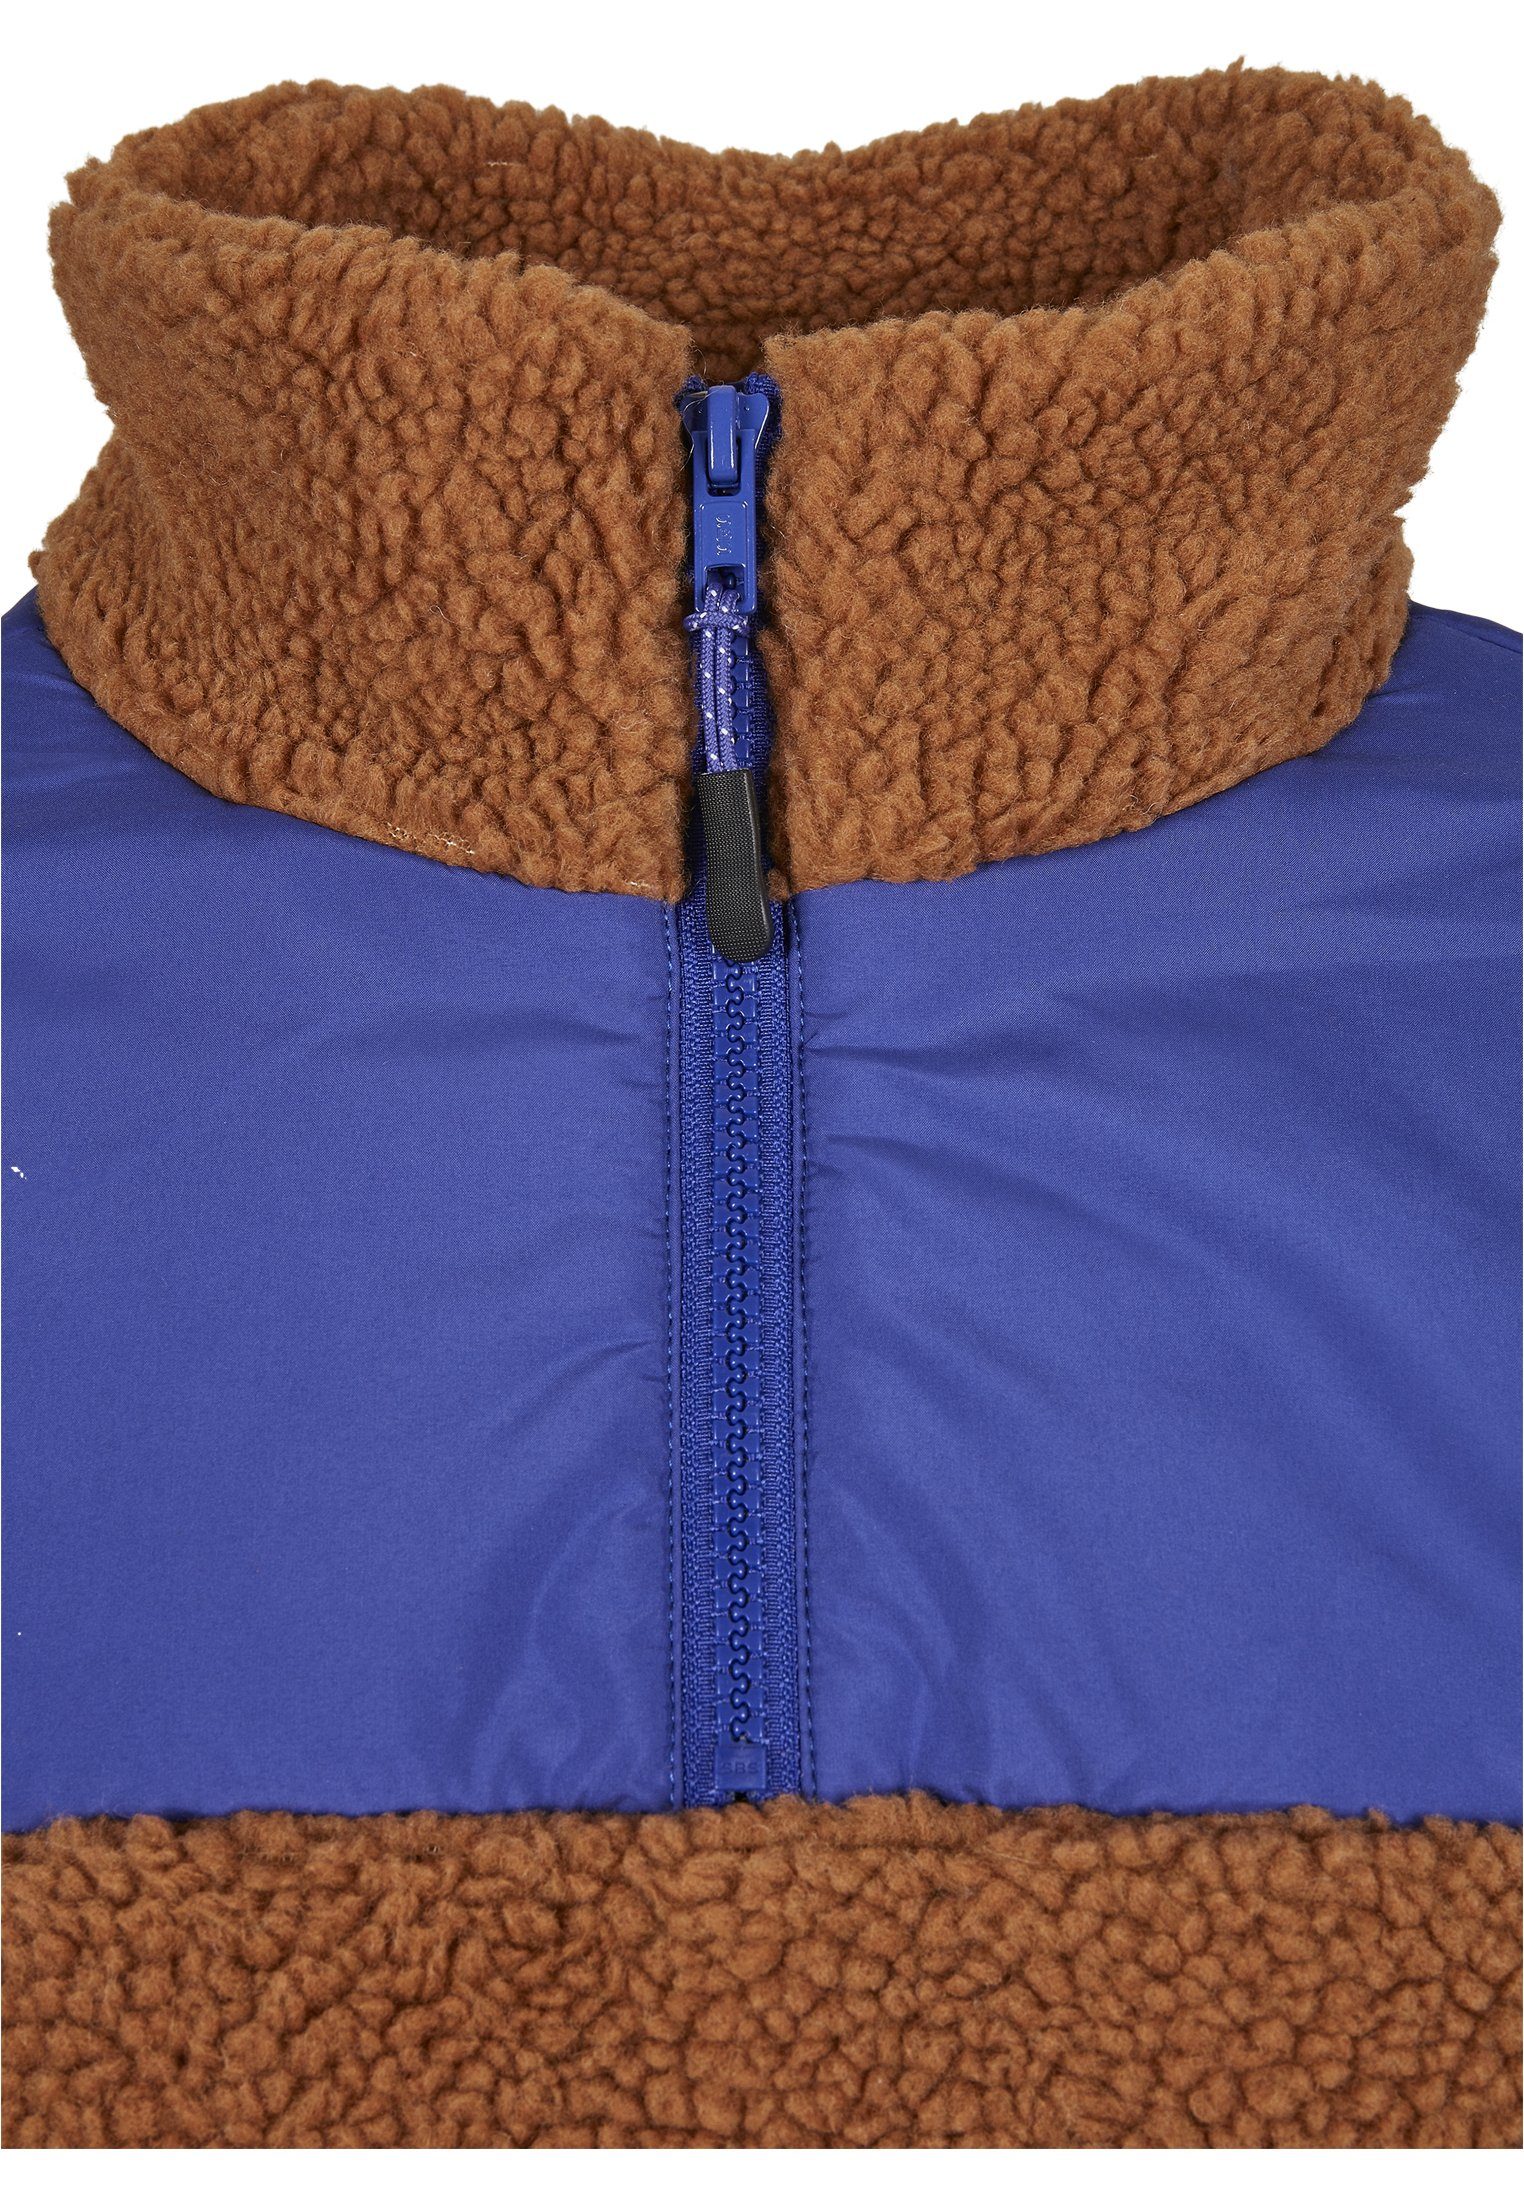 Pull 3-Tone (1-St) Jacket CLASSICS Outdoorjacke URBAN Over Frauen Sherpa Ladies